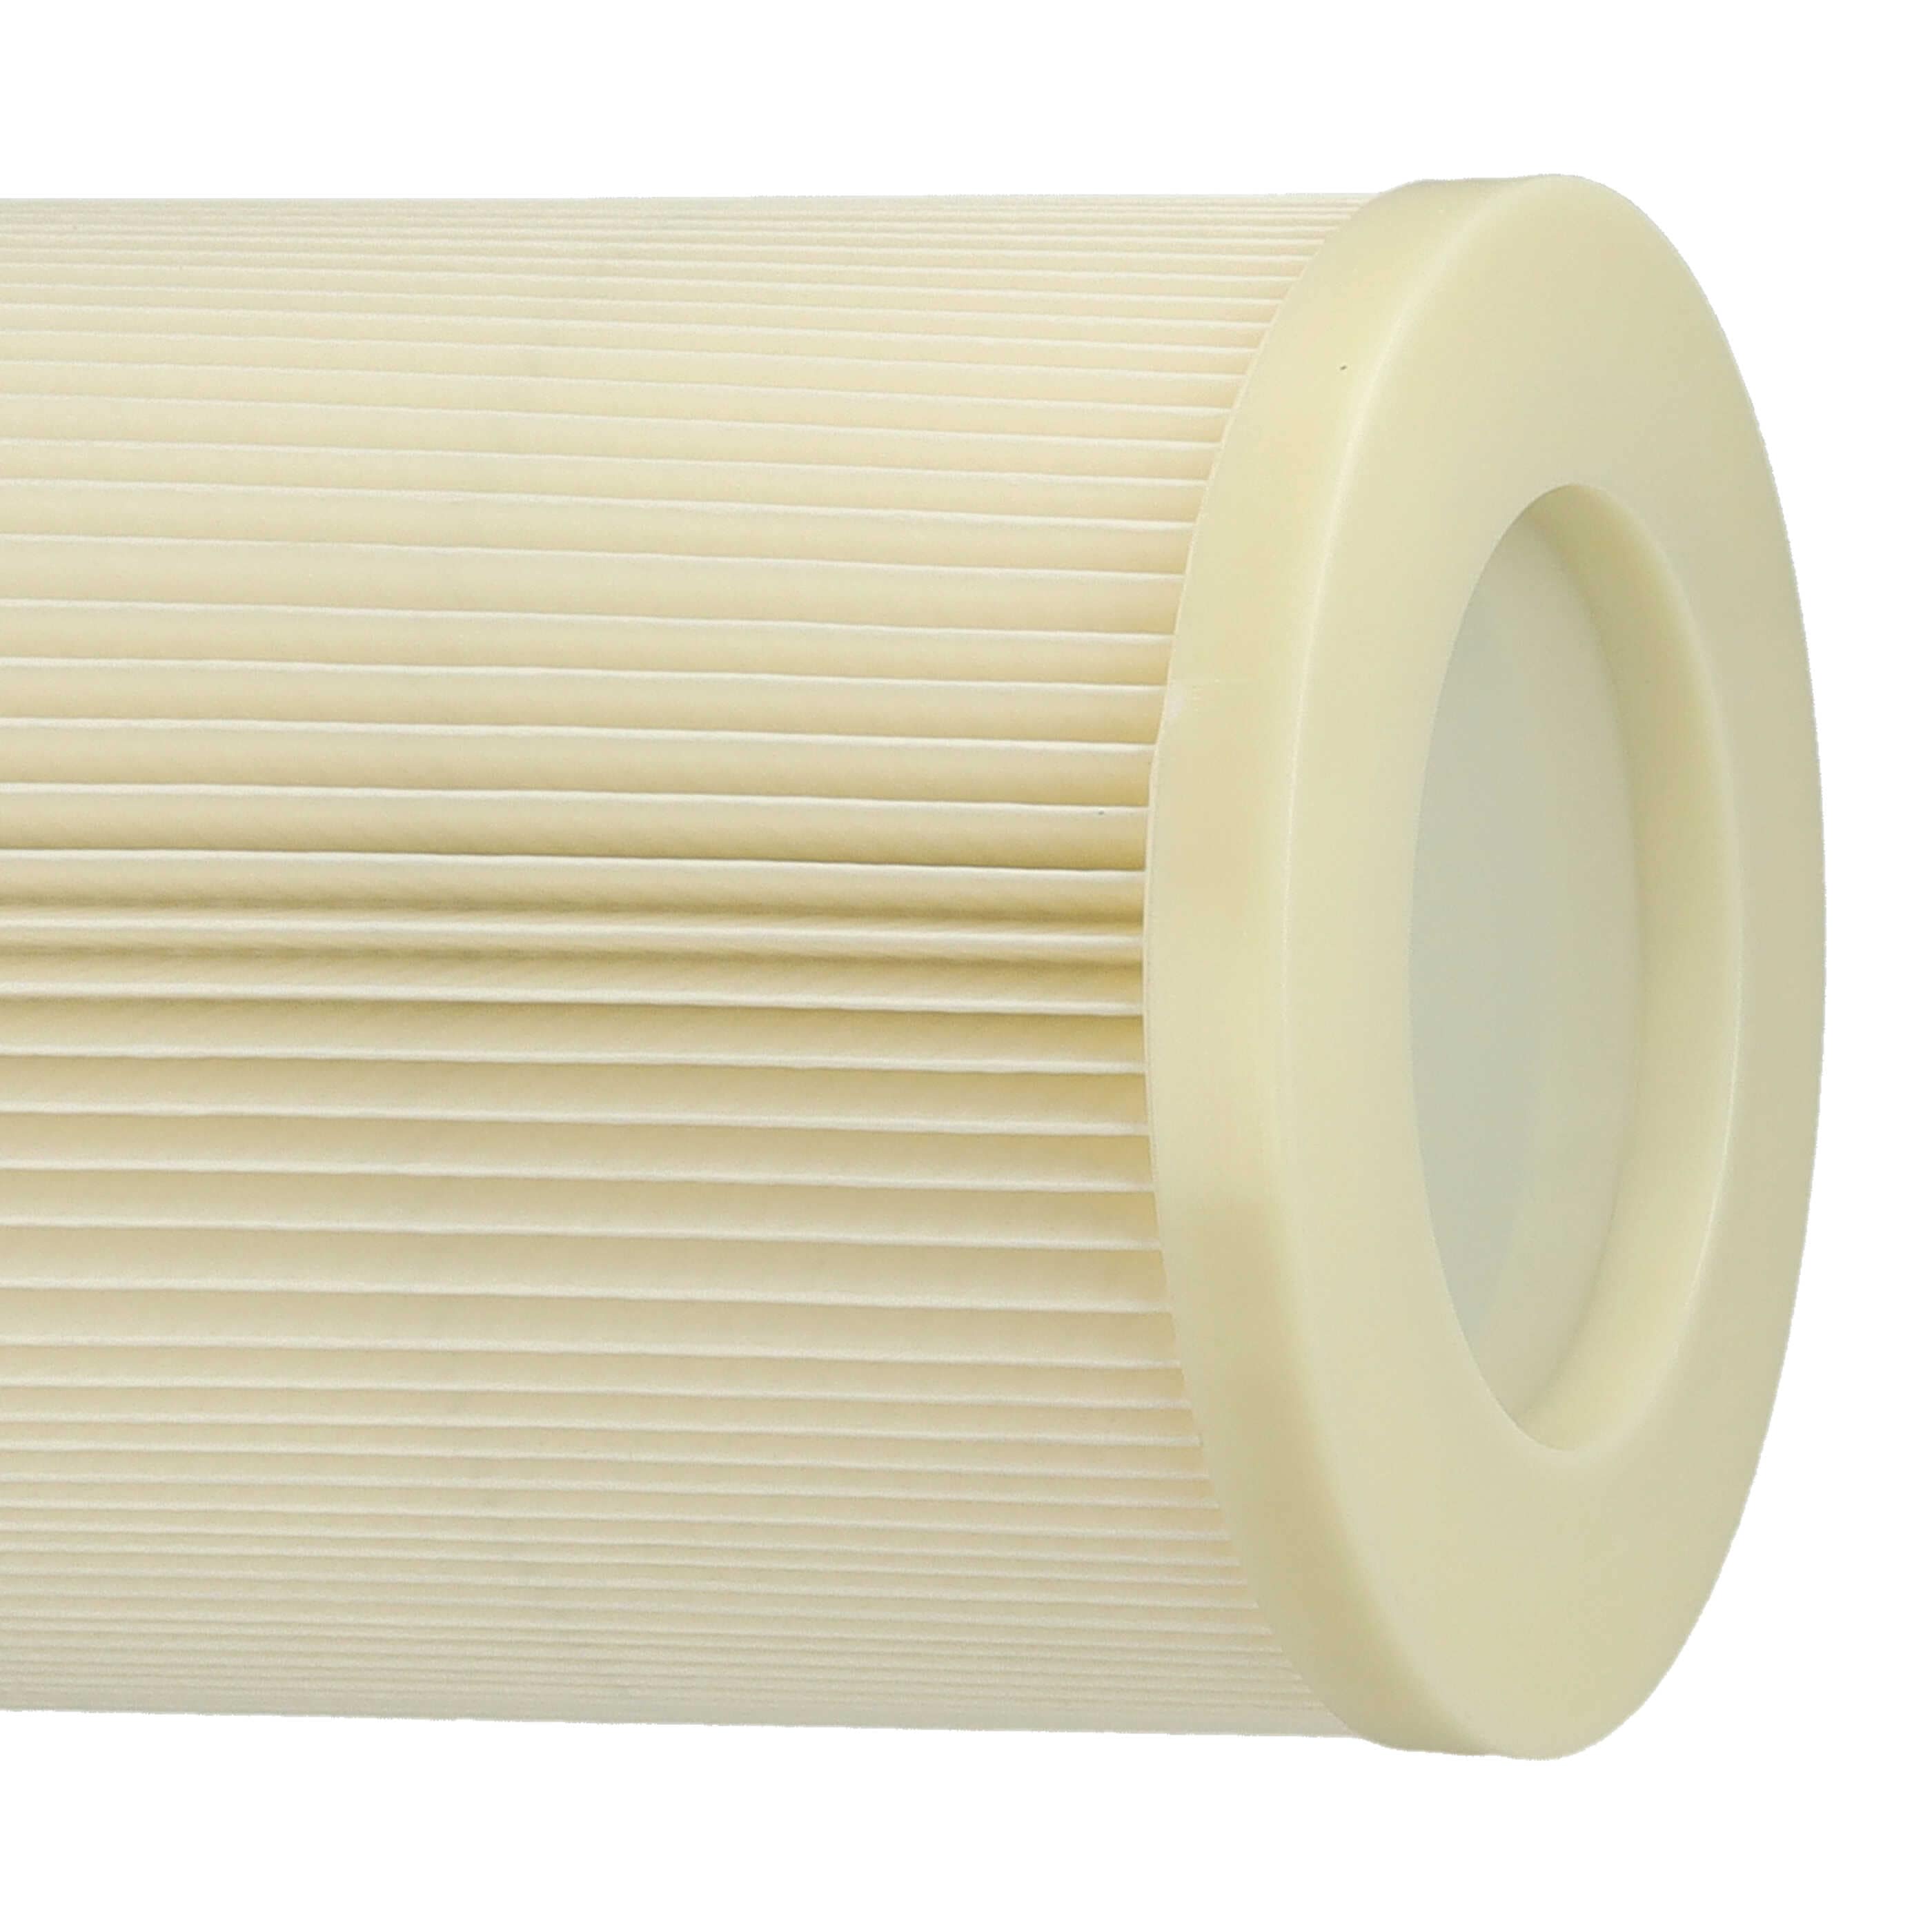 Filtro reemplaza Dustcontrol 42029 para aspiradora filtro fino, blanco